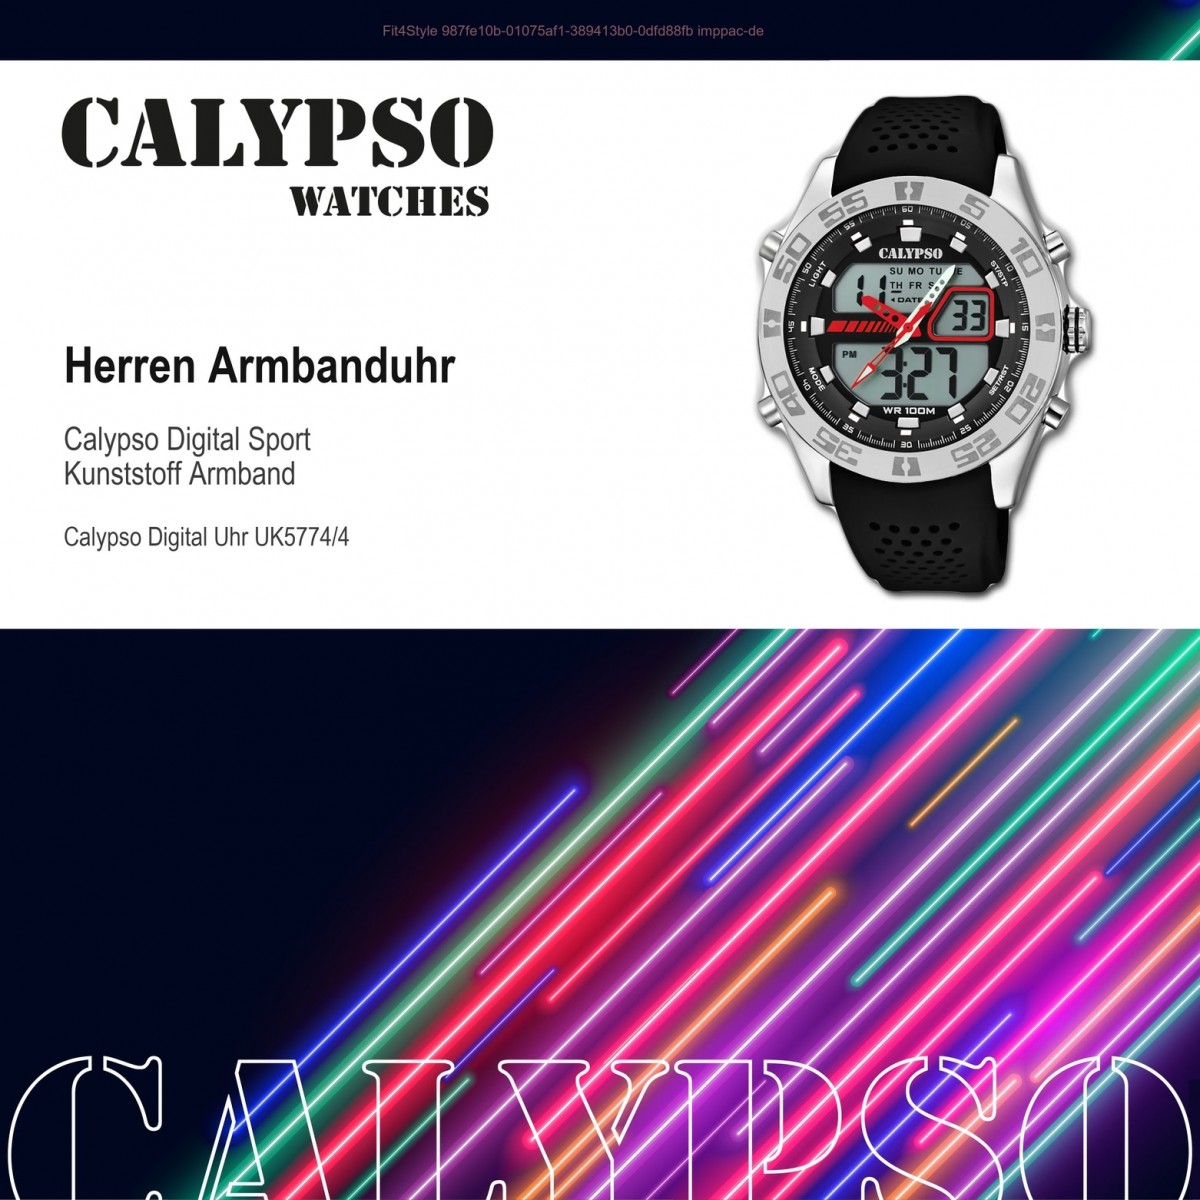 Calypso Herren Armbanduhr schwarz UK5774/4 K5774/4 Street Style PU Quarz-Uhr